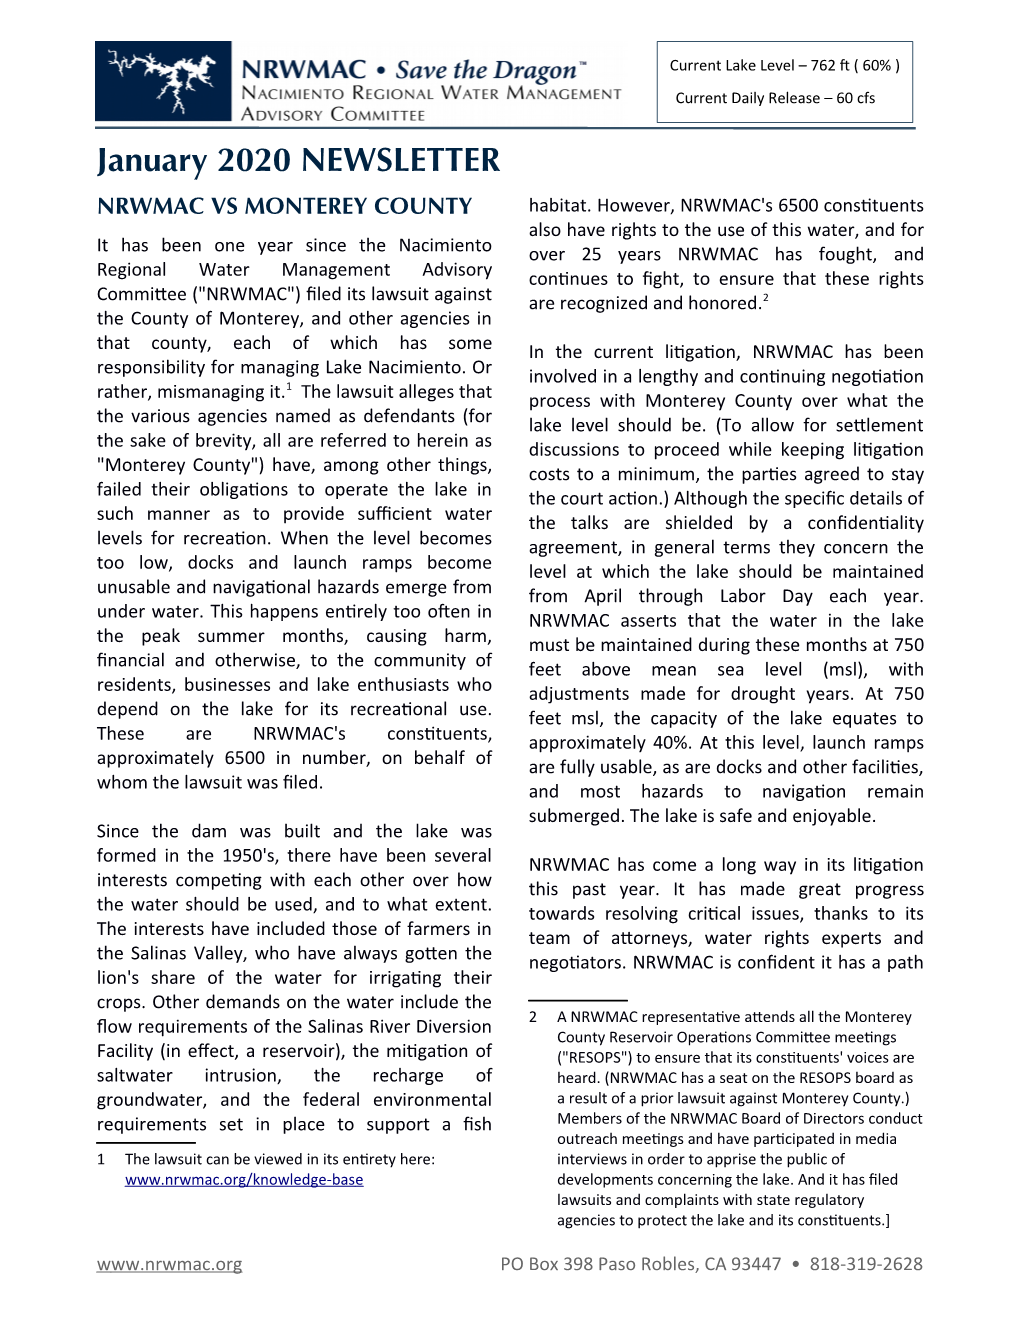 January 2020 NEWSLETTER NRWMAC VS MONTEREY COUNTY Habitat